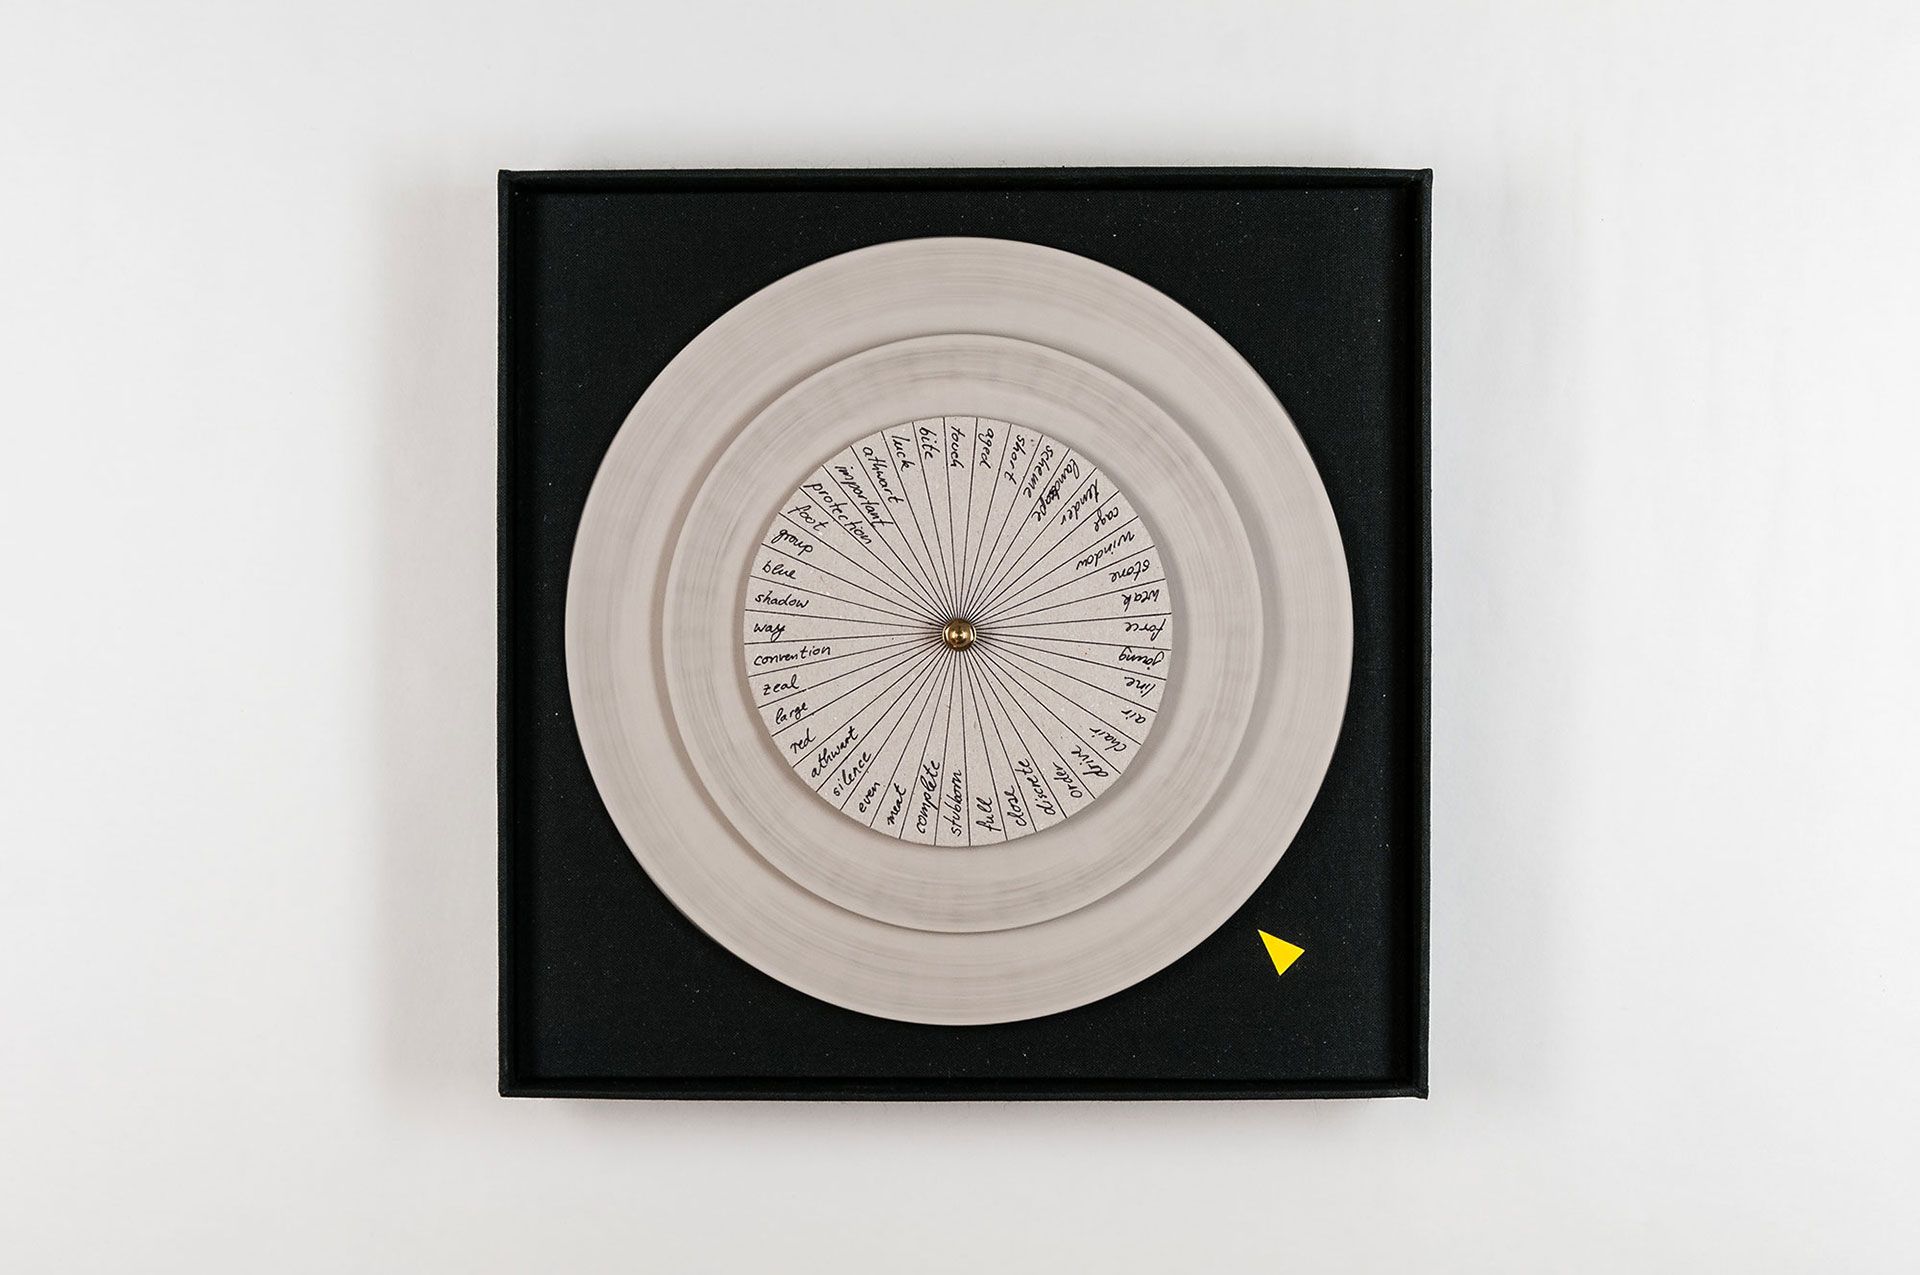 Thinking Machine,, 2007, performative object, 24.5 × 24.5 cm